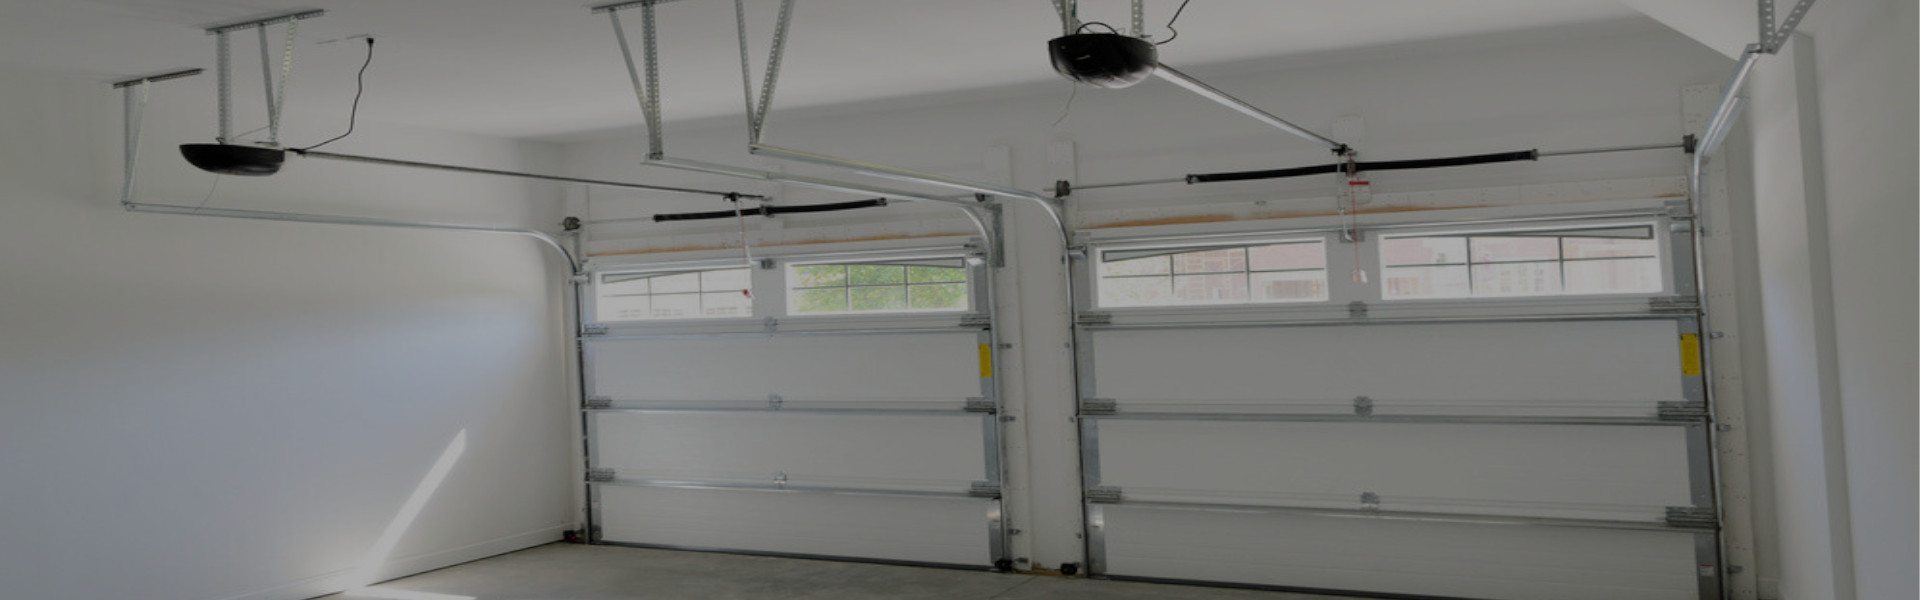 Slider Garage Door Repair, Glaziers in Rotherhithe, South Bermondsey, Surrey Docks, SE16